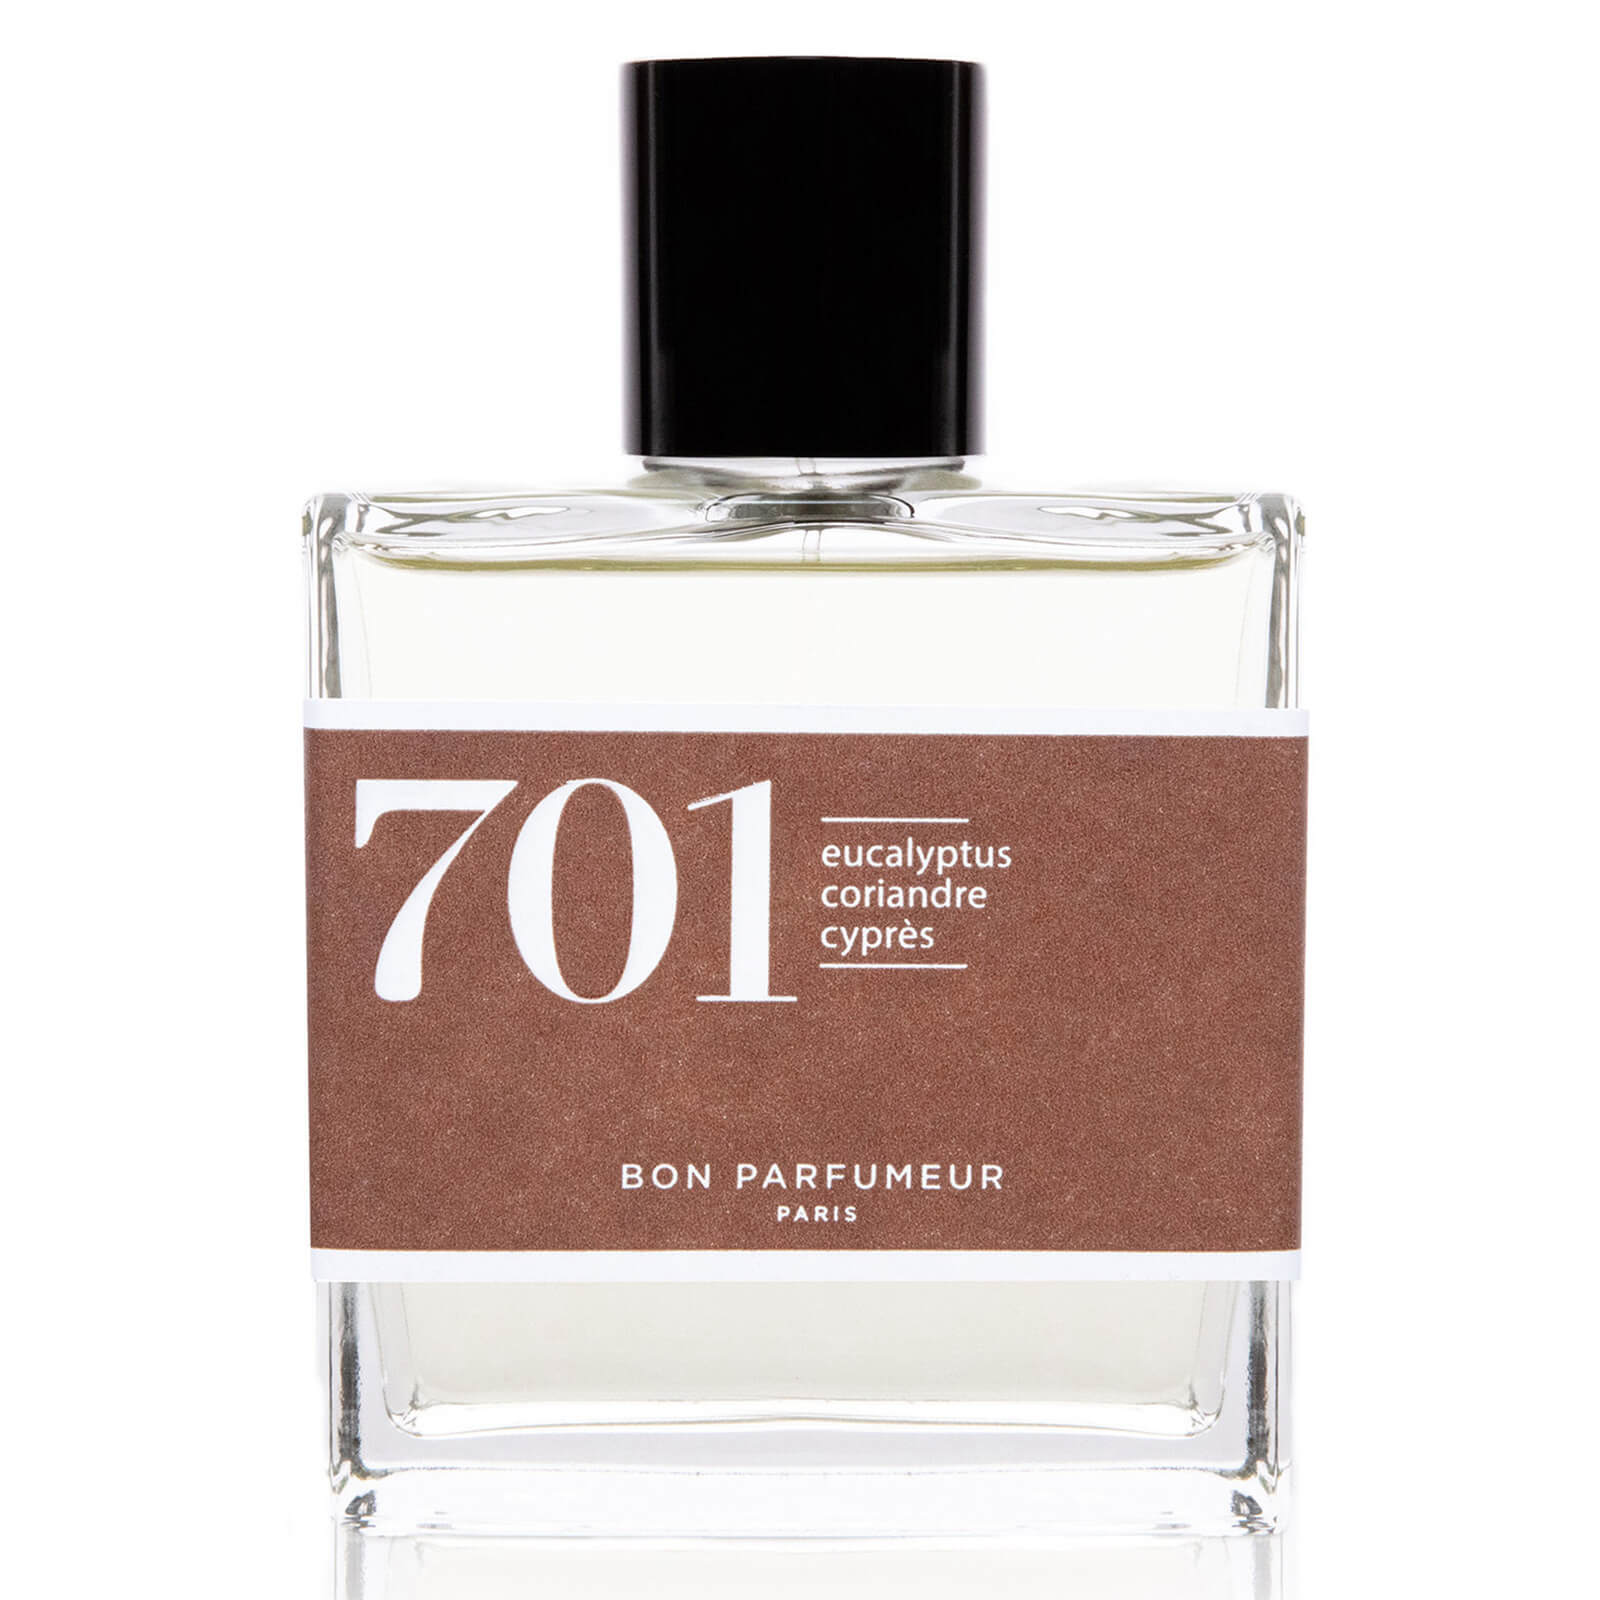 Bon Parfumeur 701 Eucalyptus Coriander Cypress Eau de Parfum (Various Sizes) - 100ml